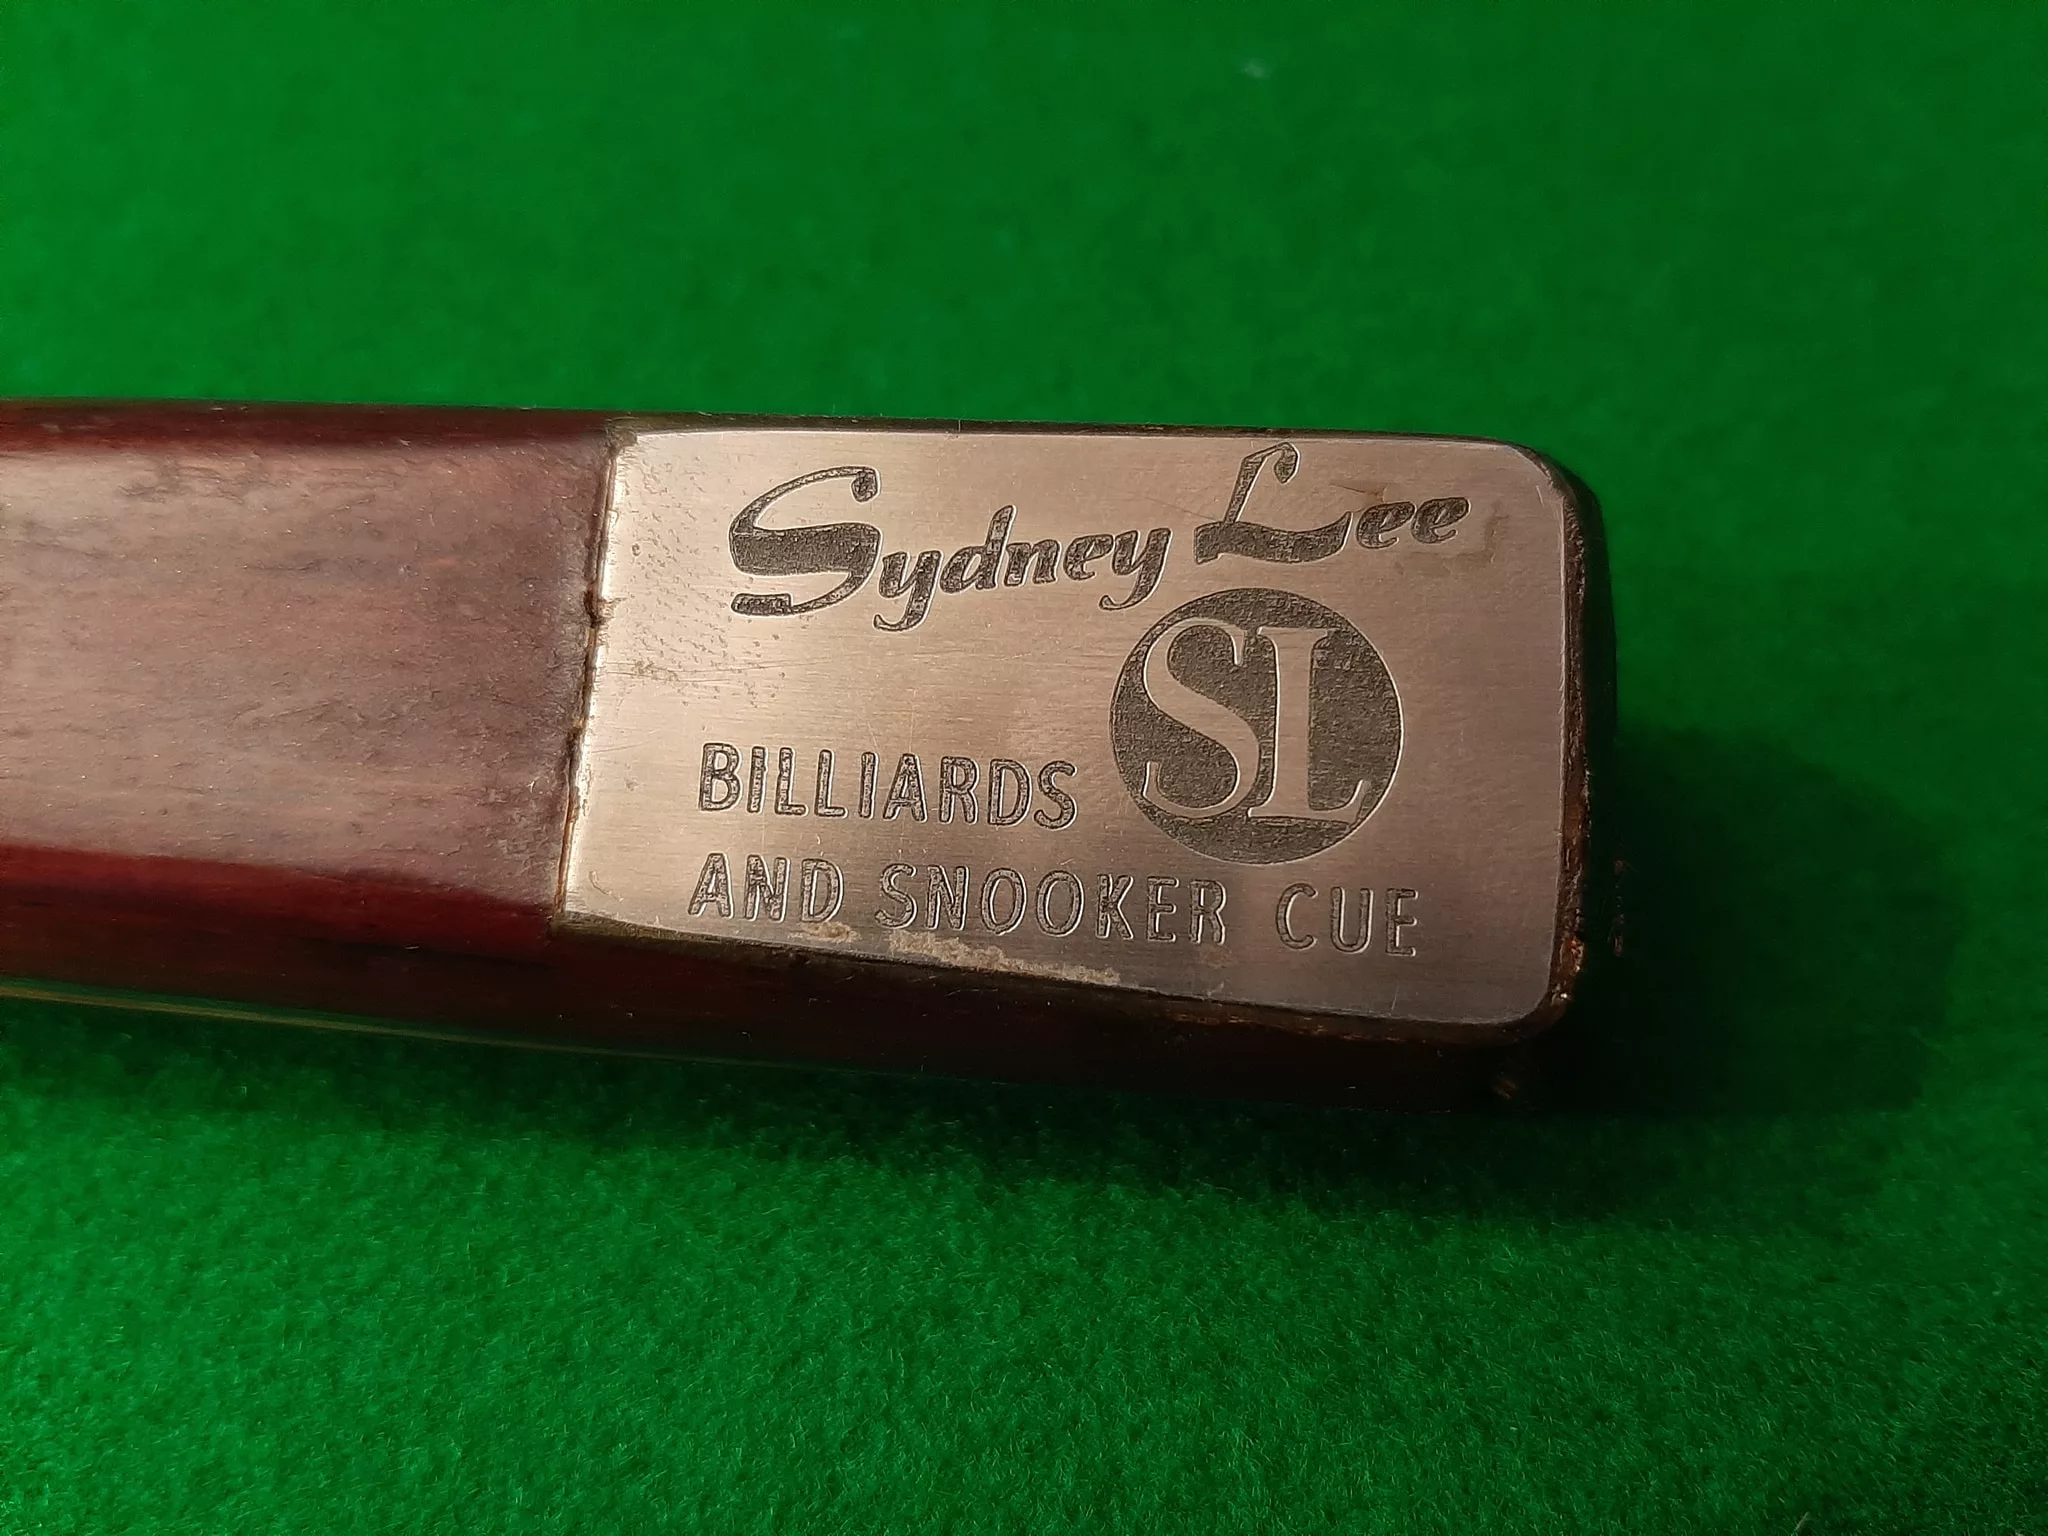 Sydney Lee Billiards and Snooker cue